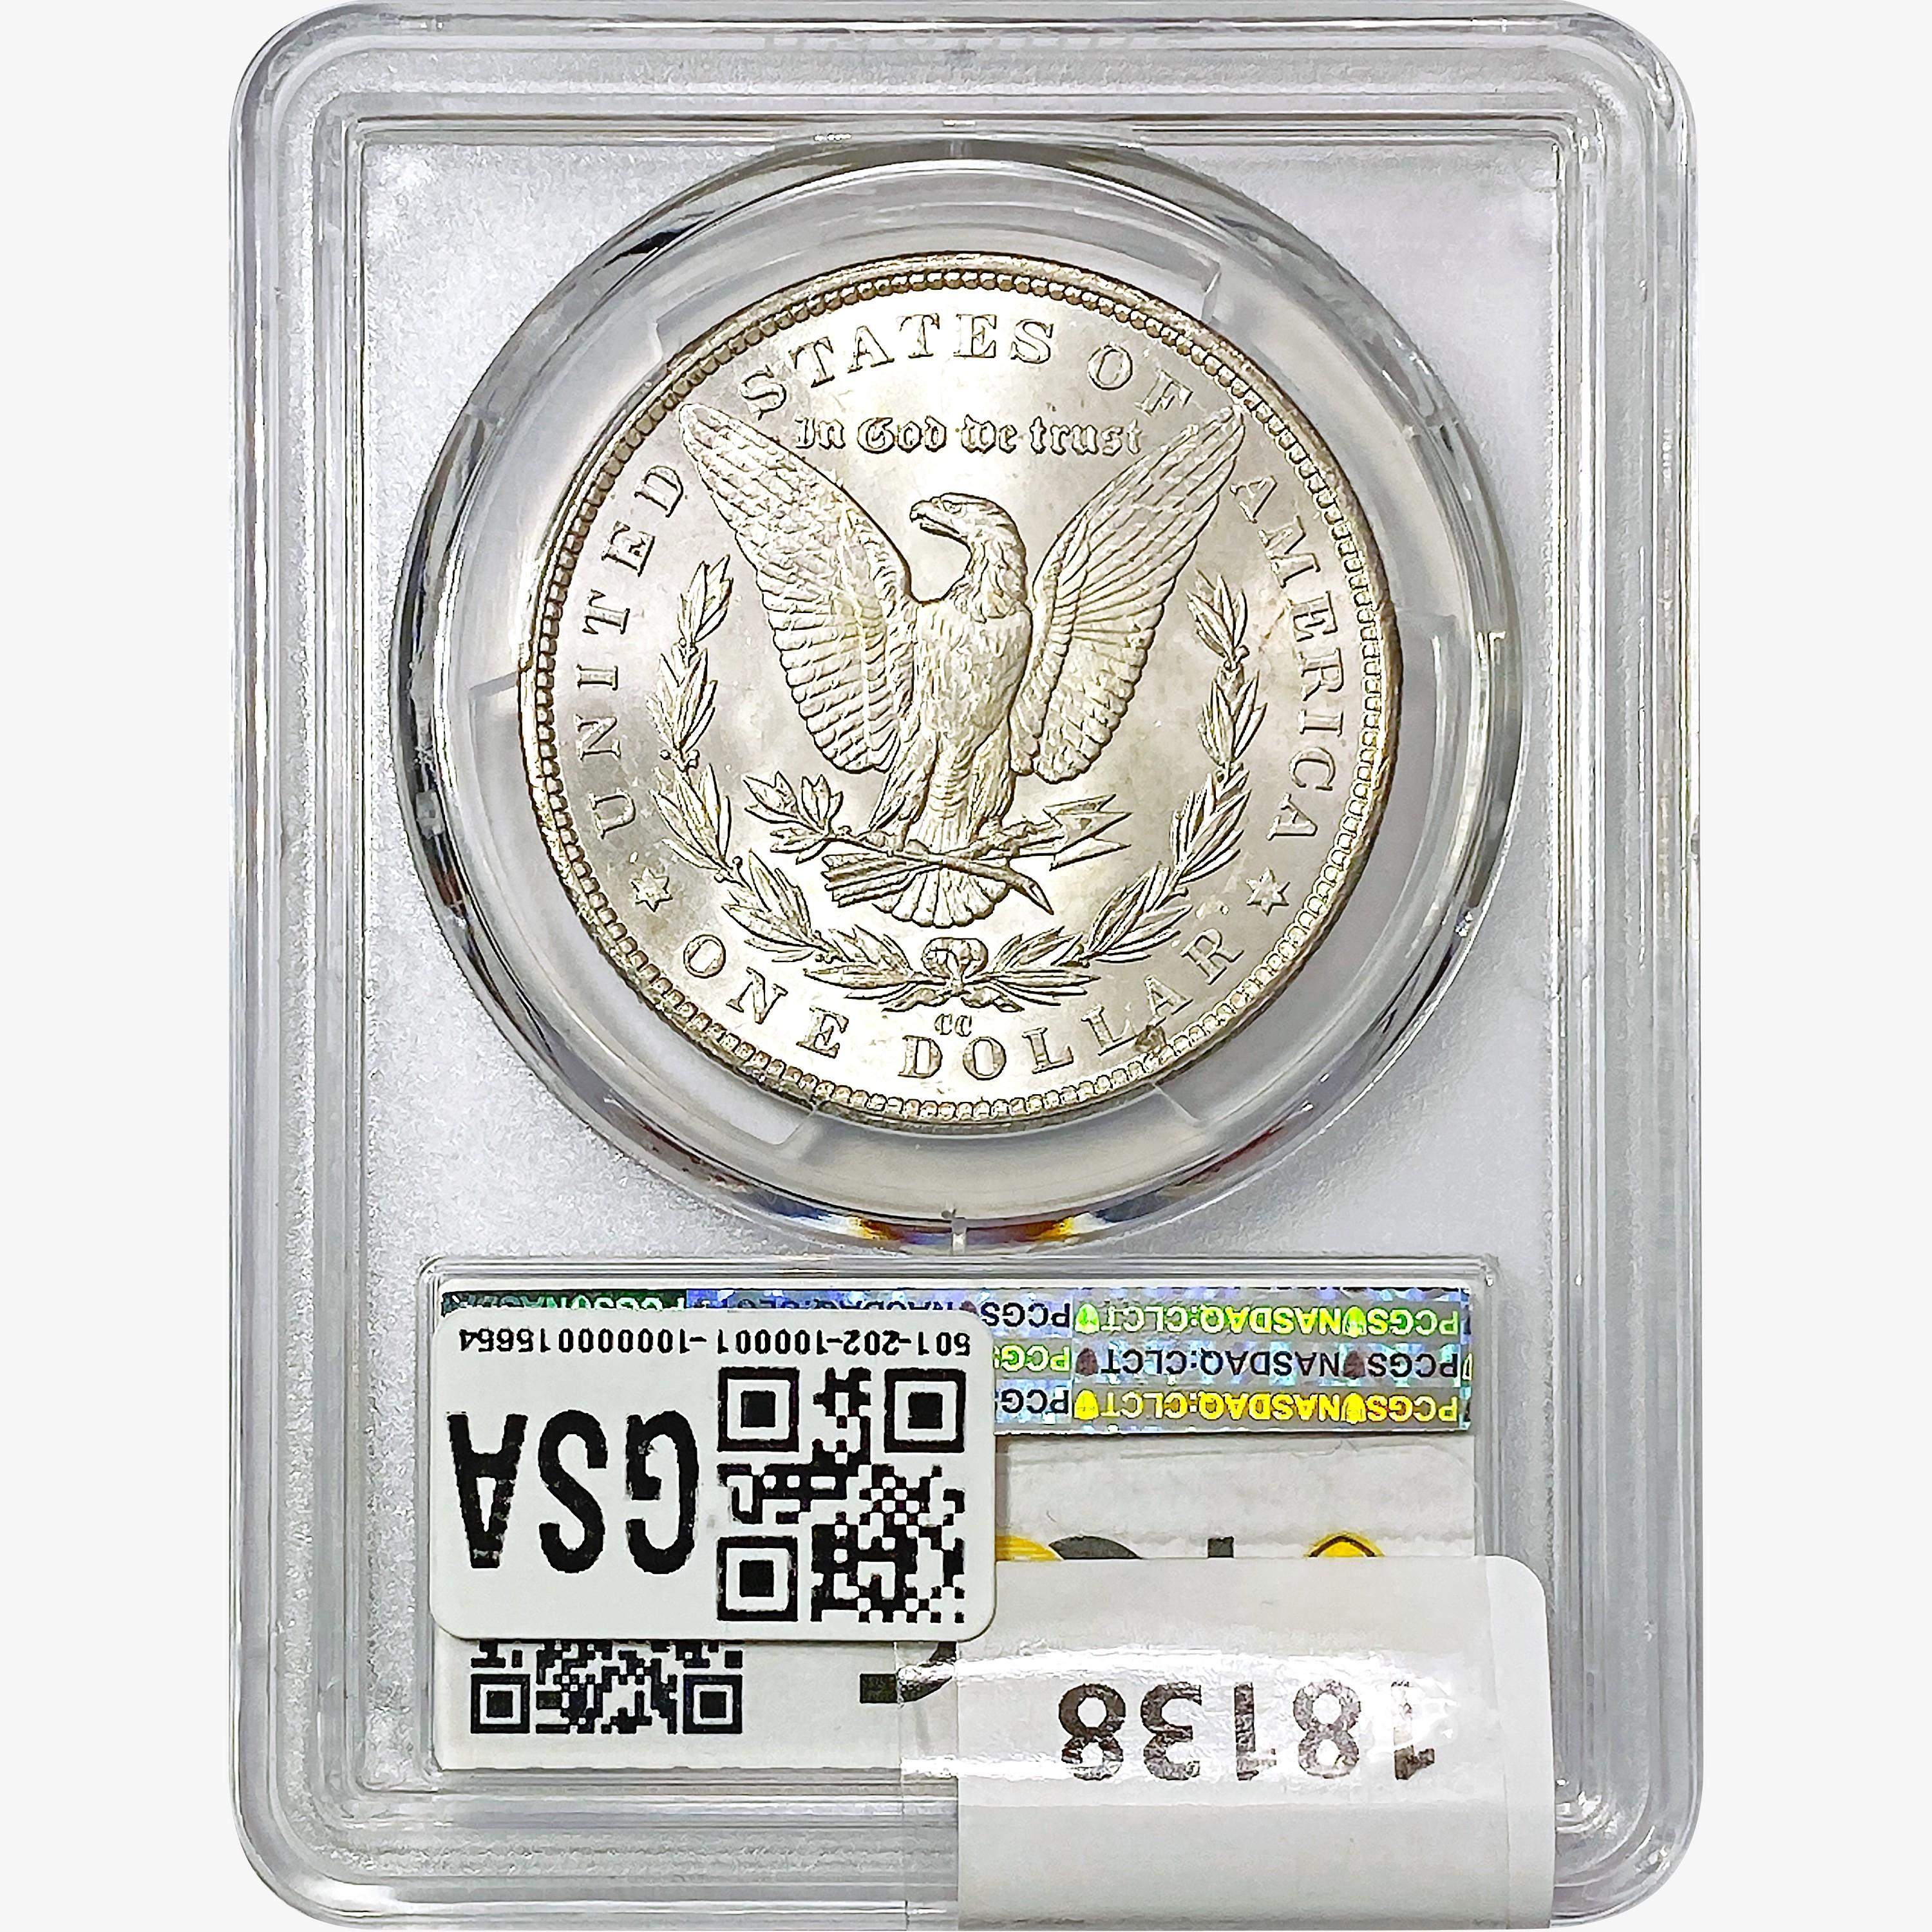 1882-CC Morgan Silver Dollar PCGS MS62